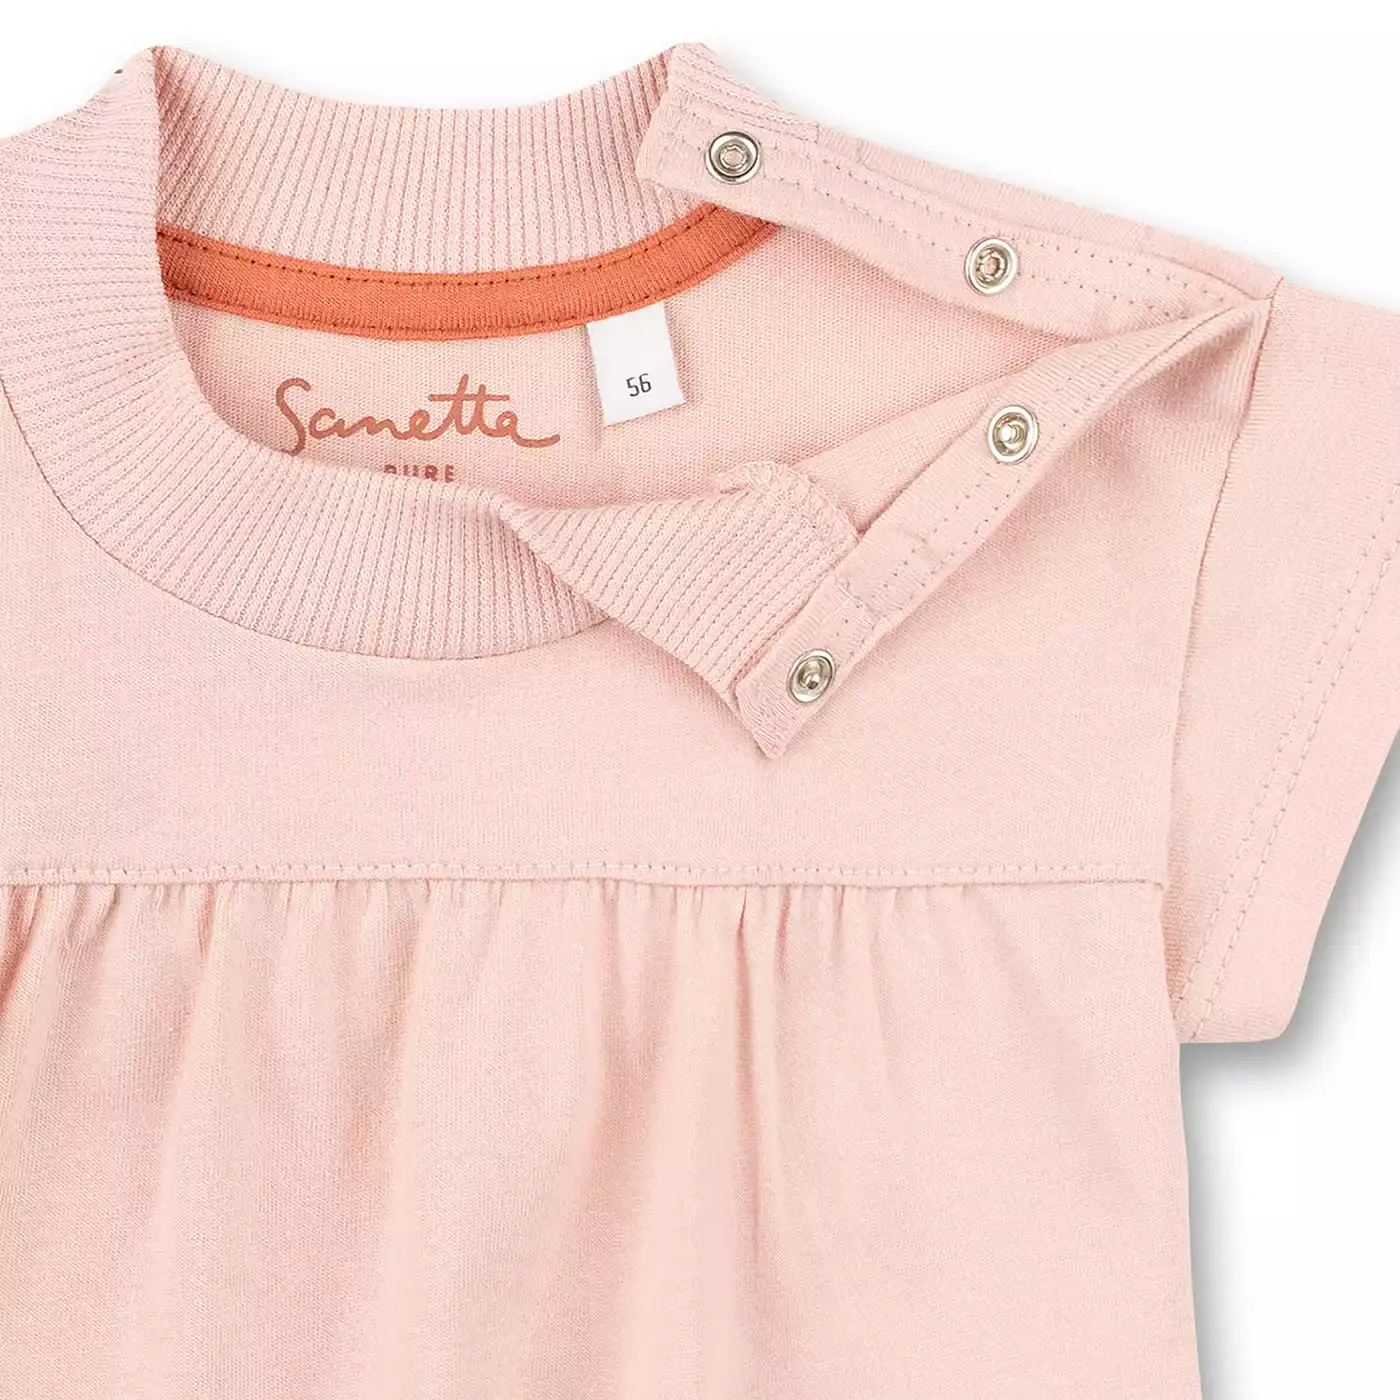 T-Shirt Pure Sanetta Pink Rosa 2004579870000 4